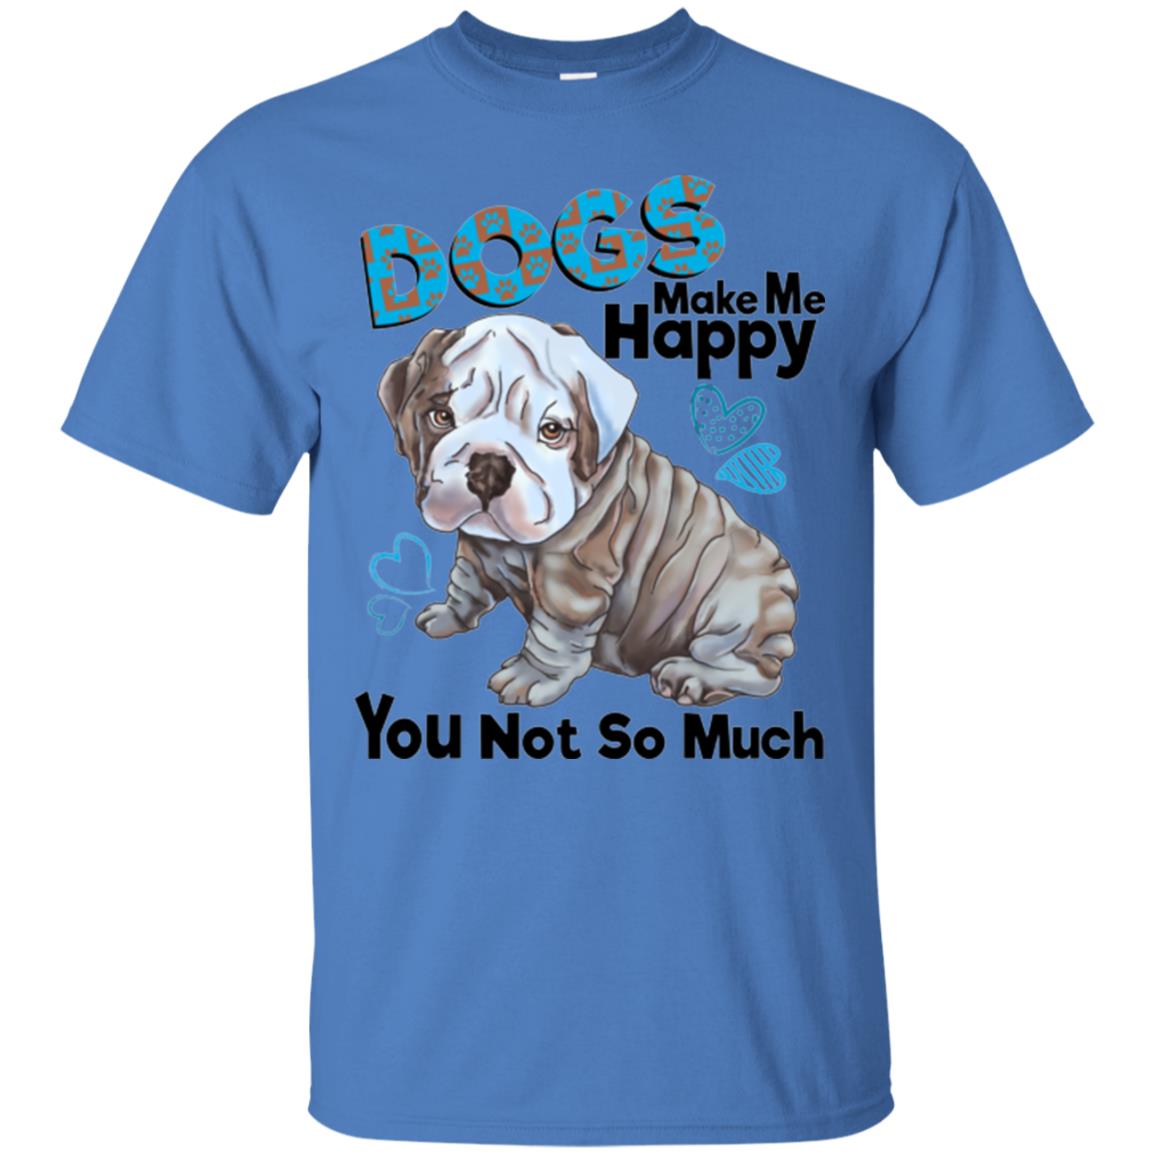 English bulldog T-shirt for Men, Women, Dogs Make Me Happy - GoneBold.gift